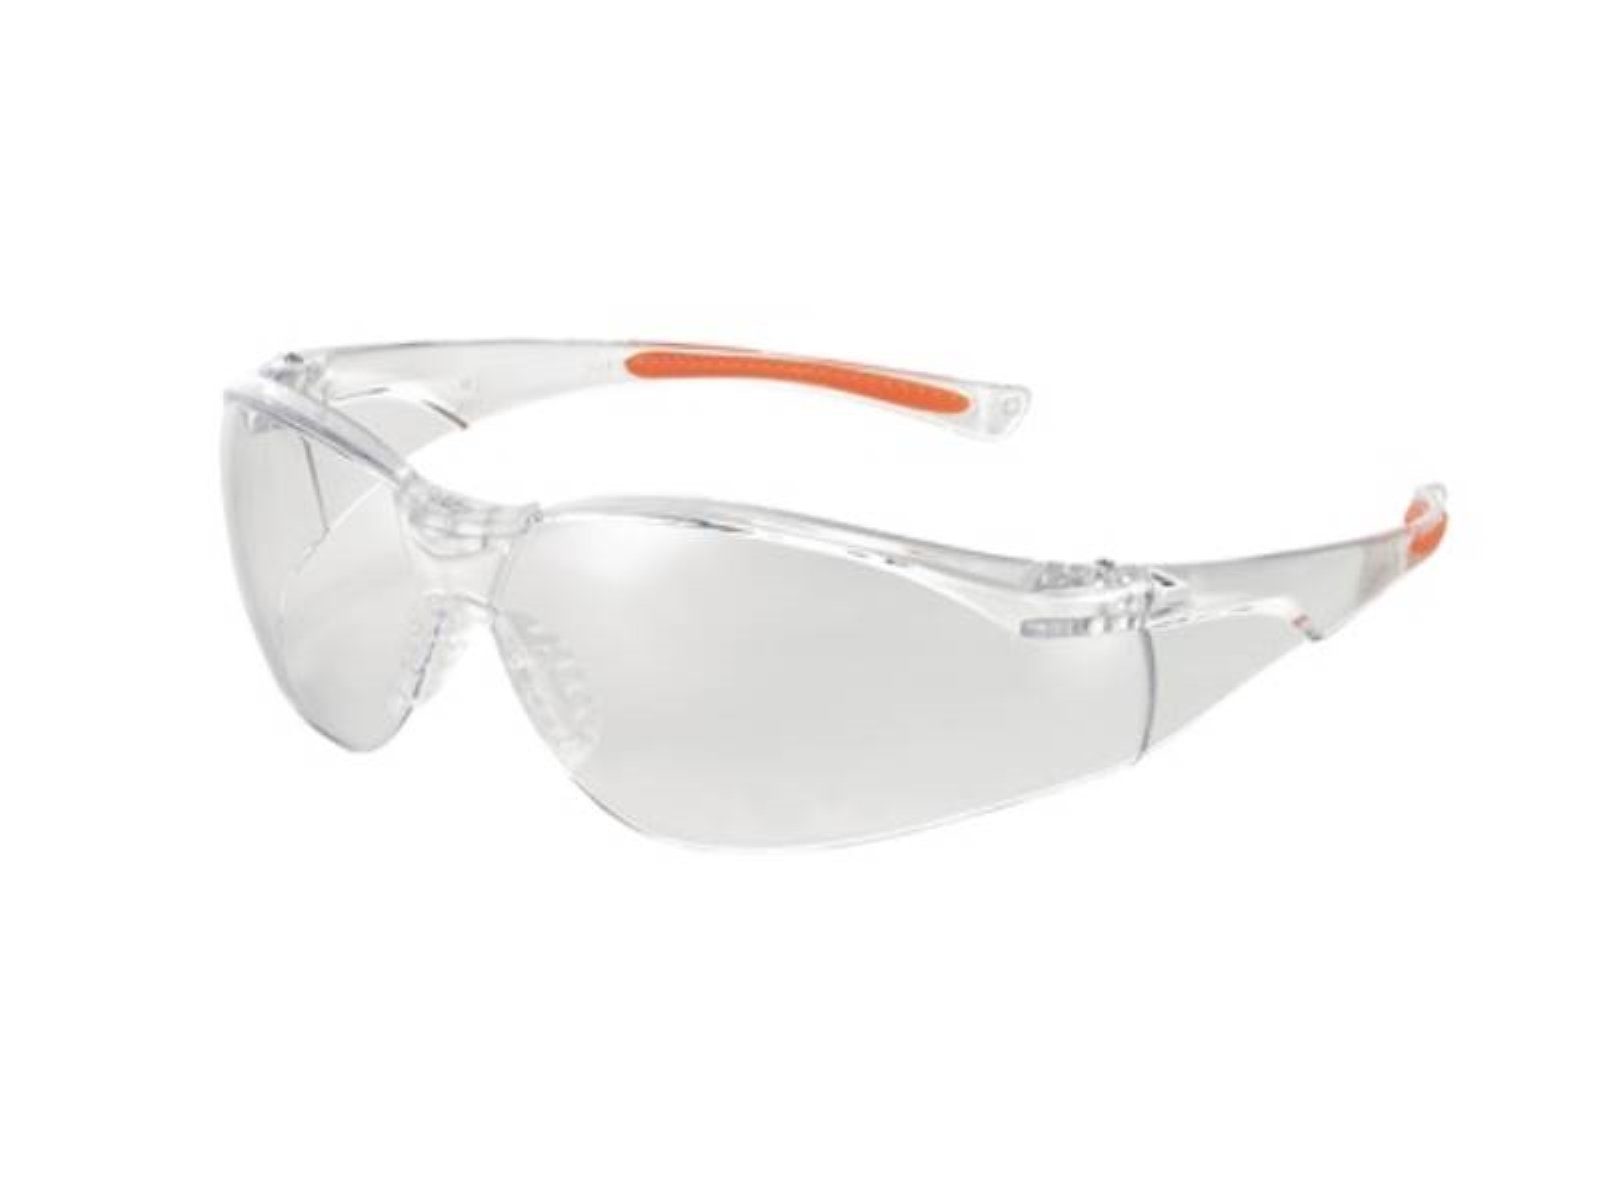 Univet Arbeitsschutzbrille Schutzbrille 513 EN 166,EN 170 FT K Bügel klar orange,Scheibe klar PC